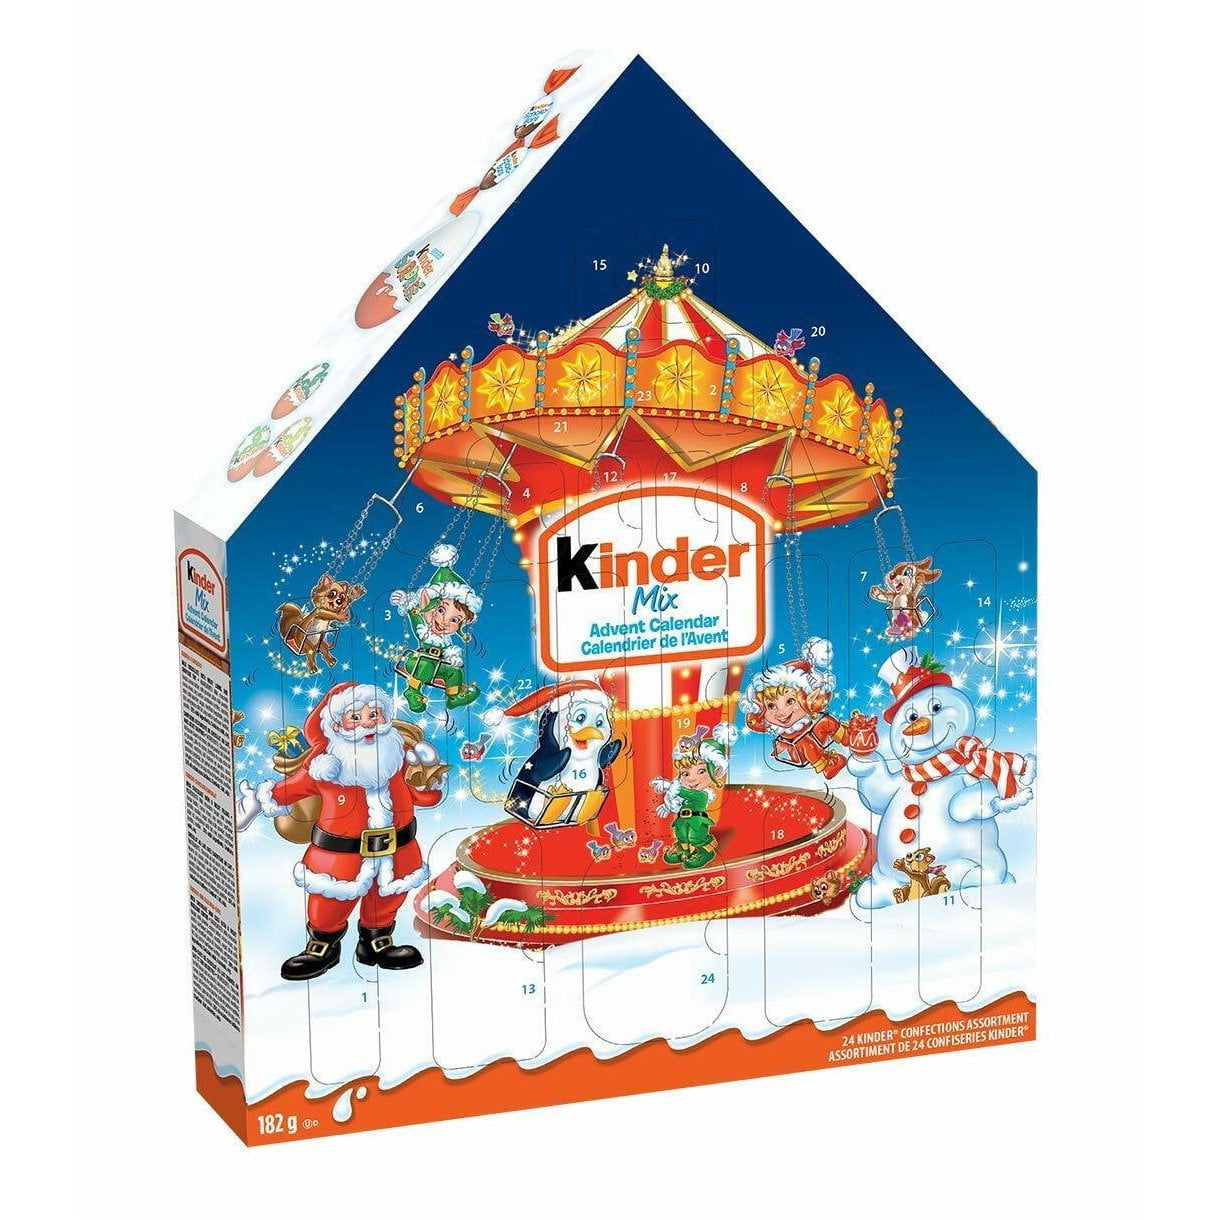 Berouw Gloed Storen Kinder Christmas Advent Calendar, 24 Count Assorted Chocolates, 182 grams -  Walmart.com